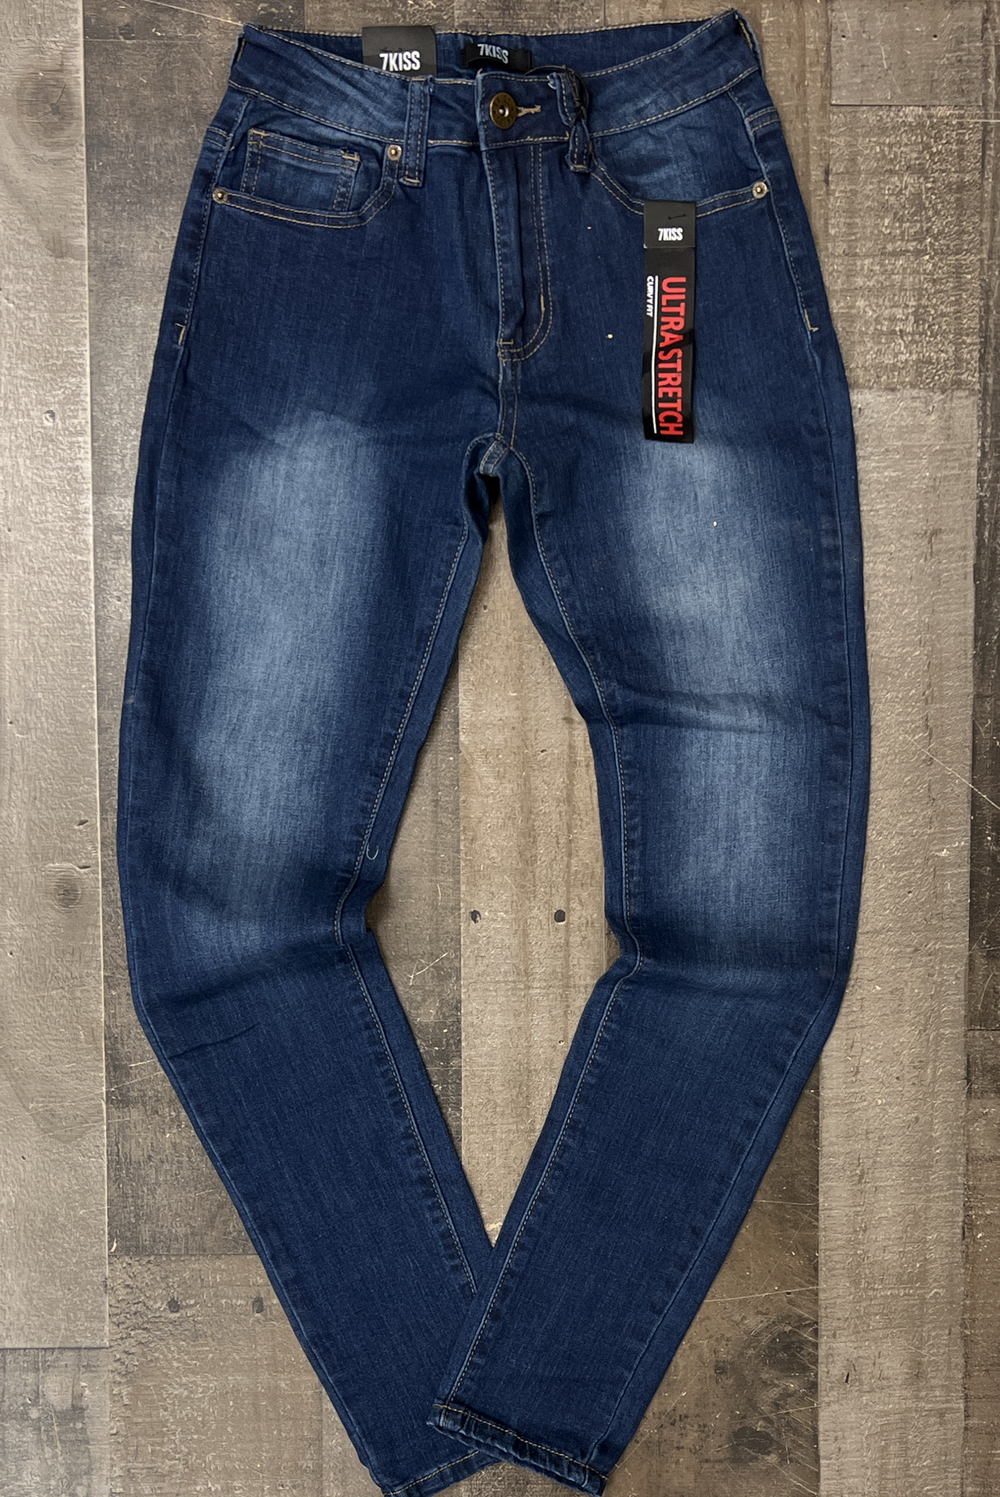 7Kiss - Blue jeans (womens)